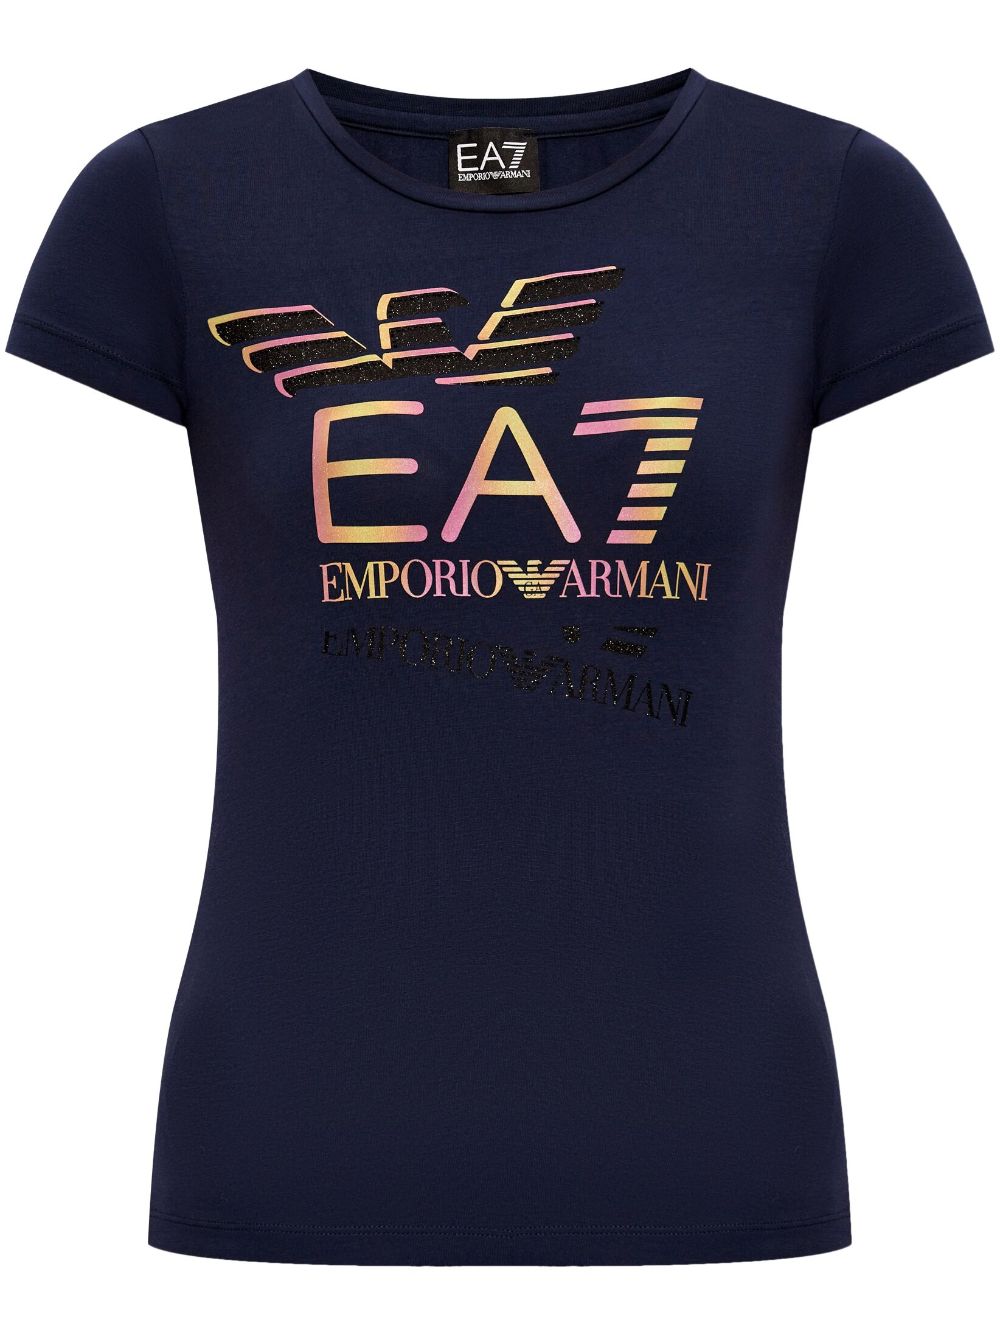 Ea7 Emporio Armani logo-print cotton t-shirt - Black